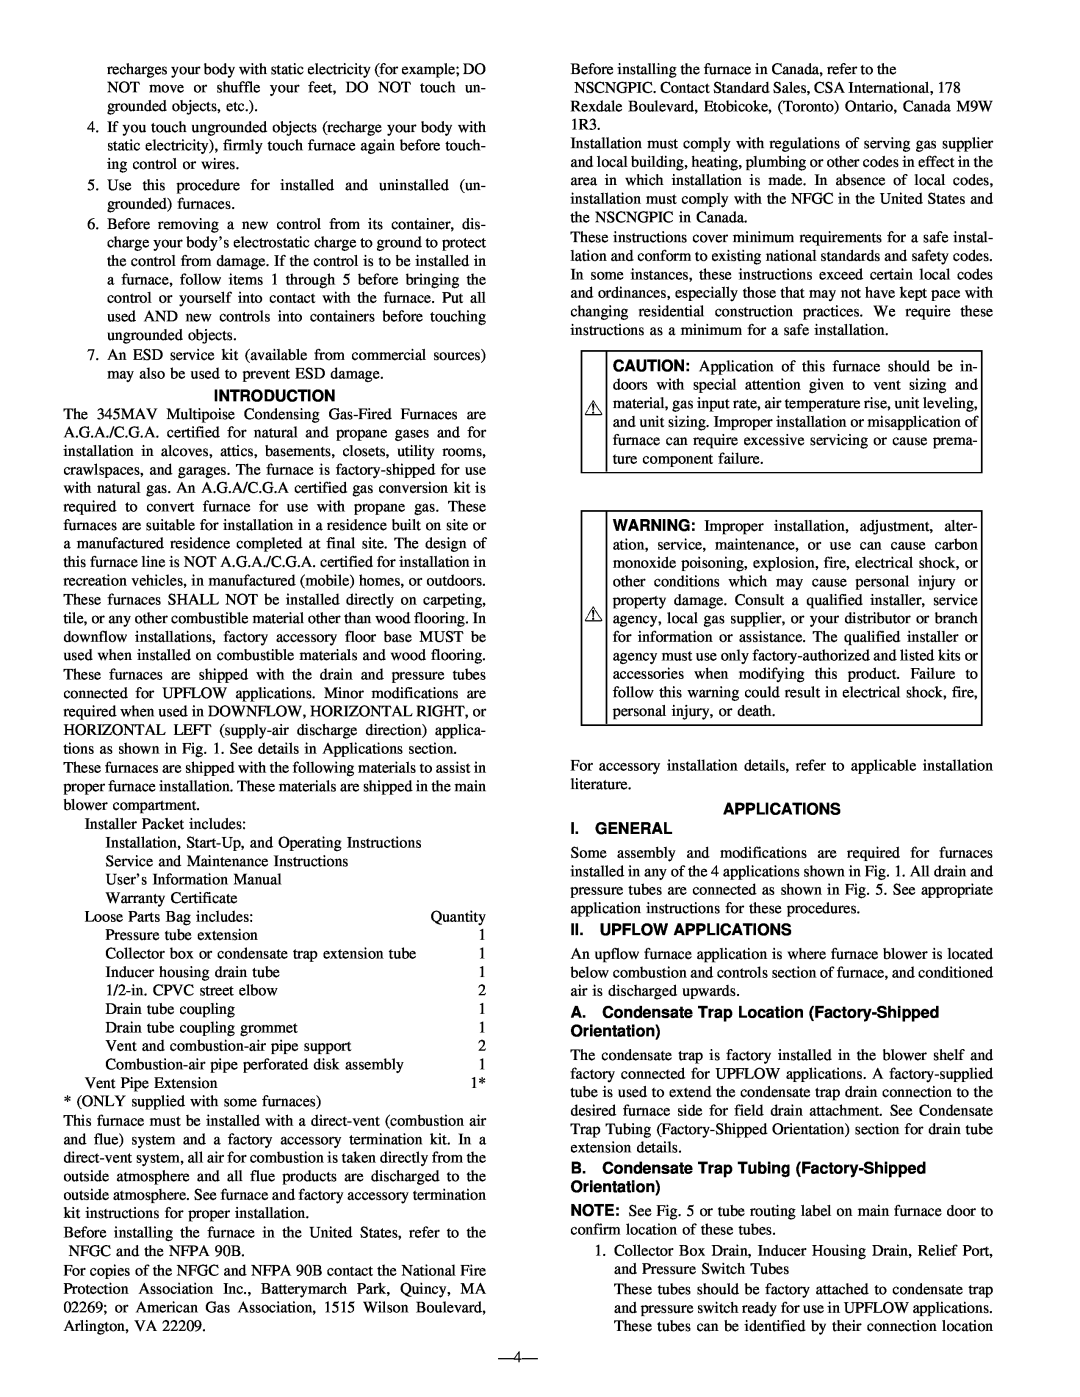 Bryant 345MAV instruction manual Introduction, Applications I.General, Ii.Upflow Applications 